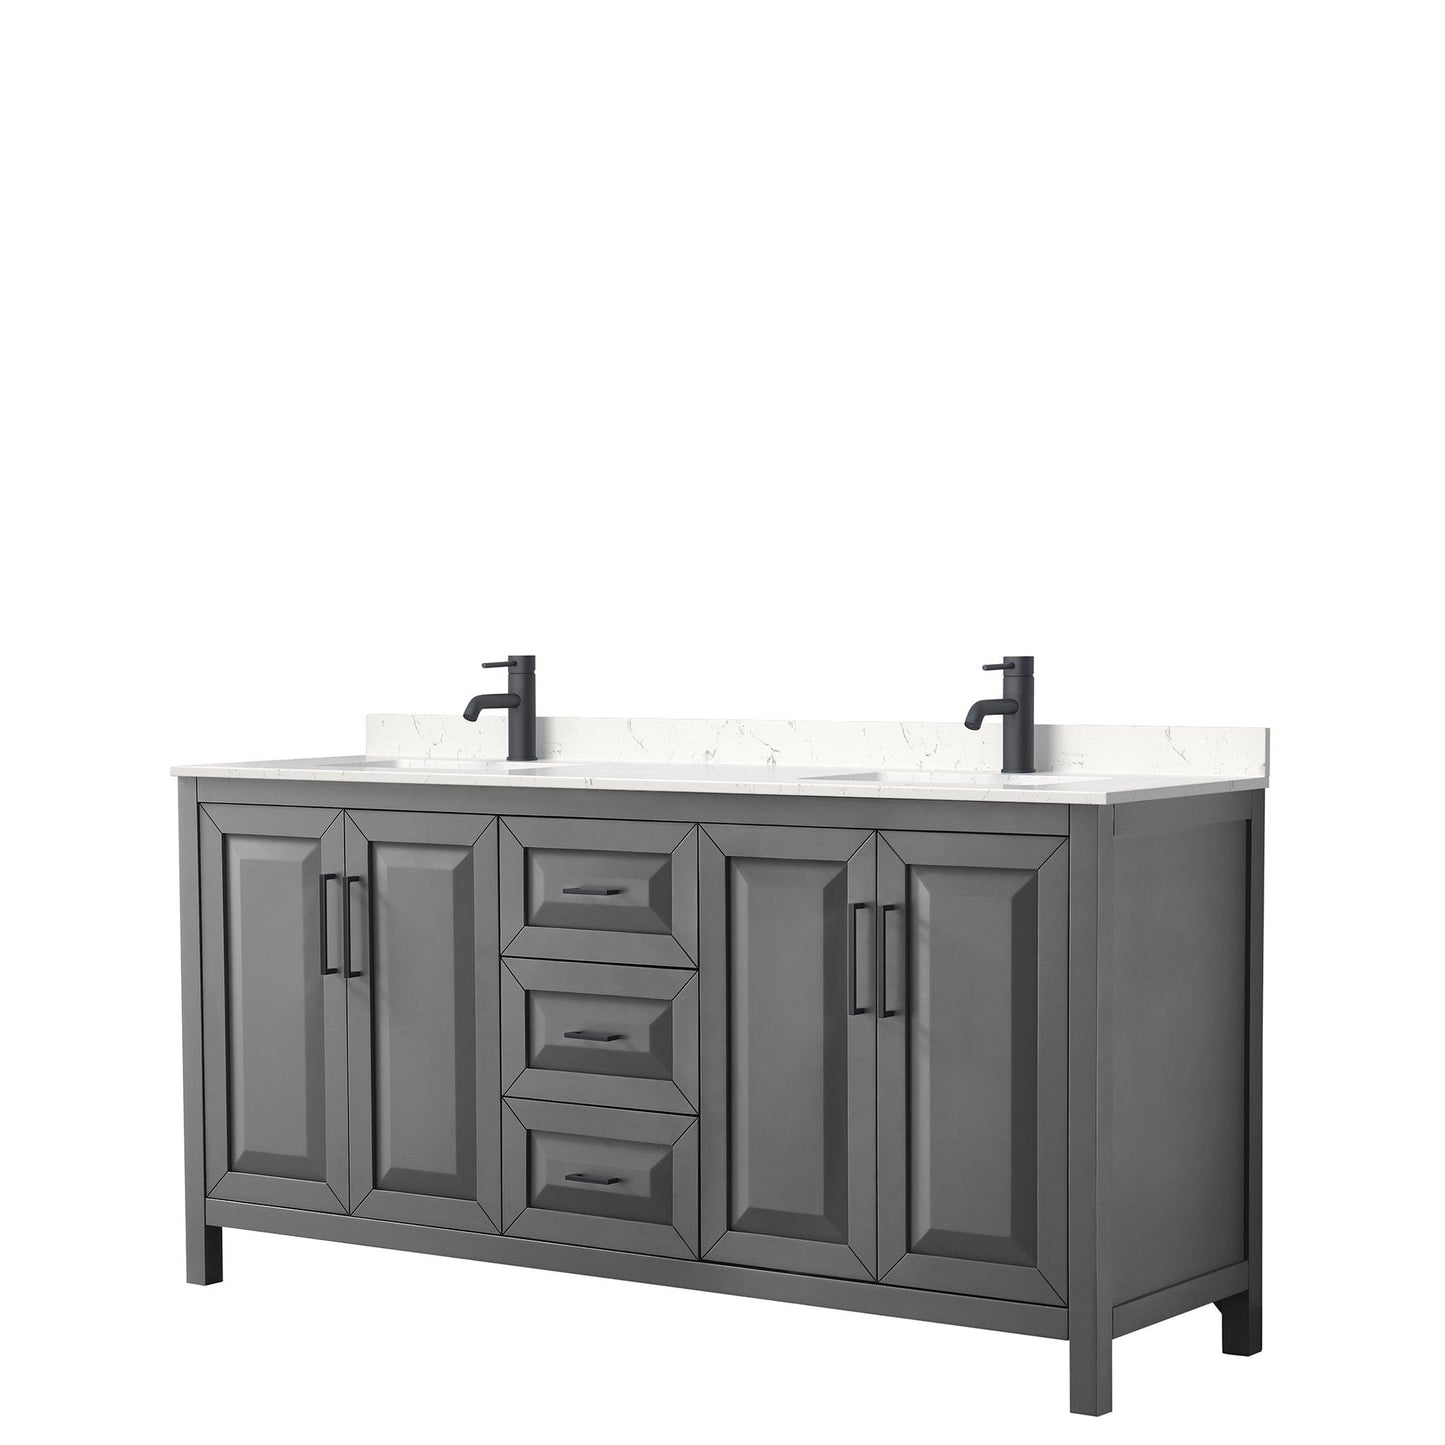 Daria 72" Double Bathroom Vanity in Dark Gray, Carrara Cultured Marble Countertop, Undermount Square Sinks, Matte Black Trim